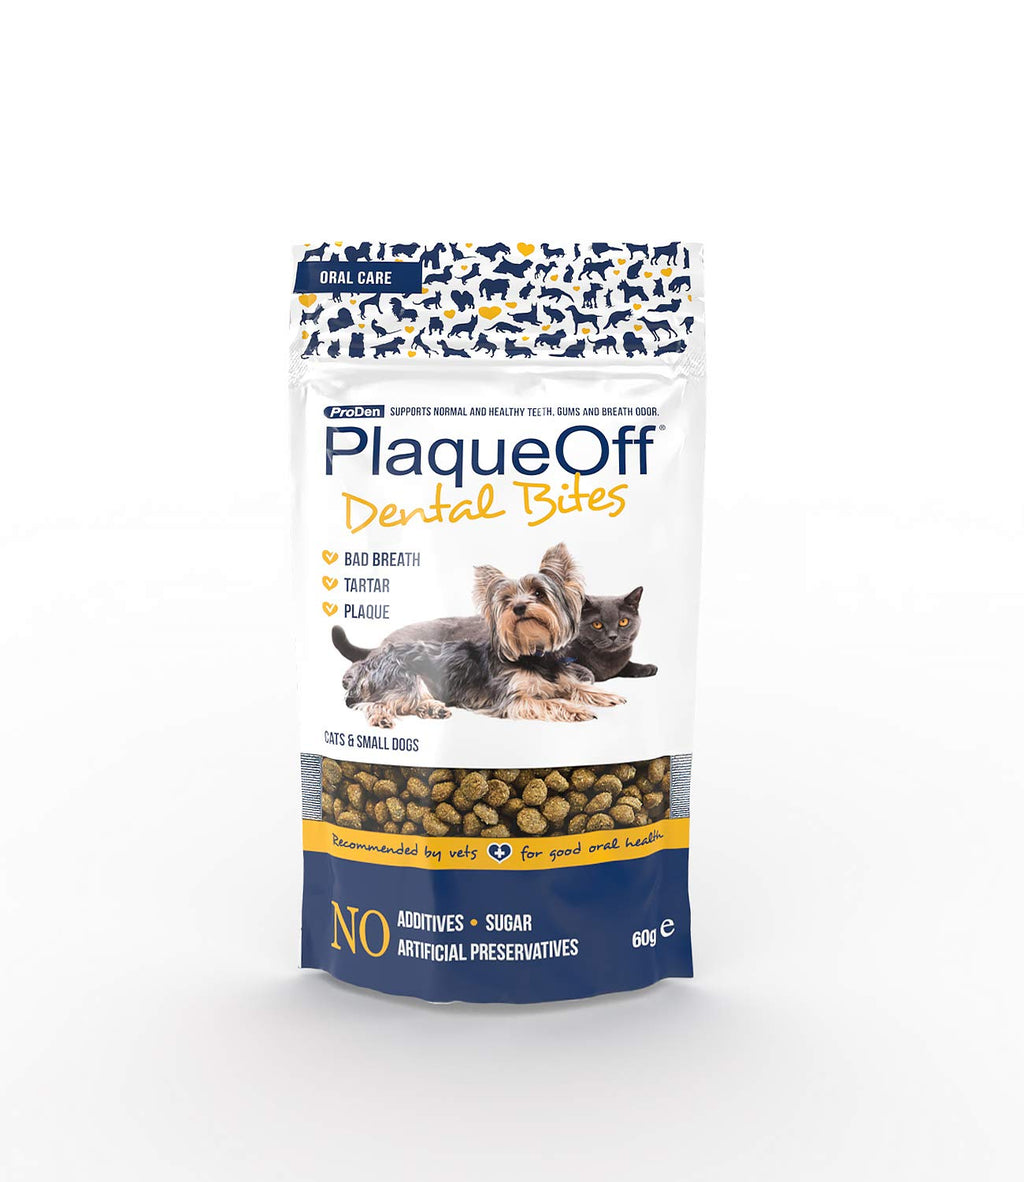 ProDen PlaqueOff Dental Bites 60 g for Dogs Under 10 kg, Bad Breath, Plaque, Tartar - PawsPlanet Australia